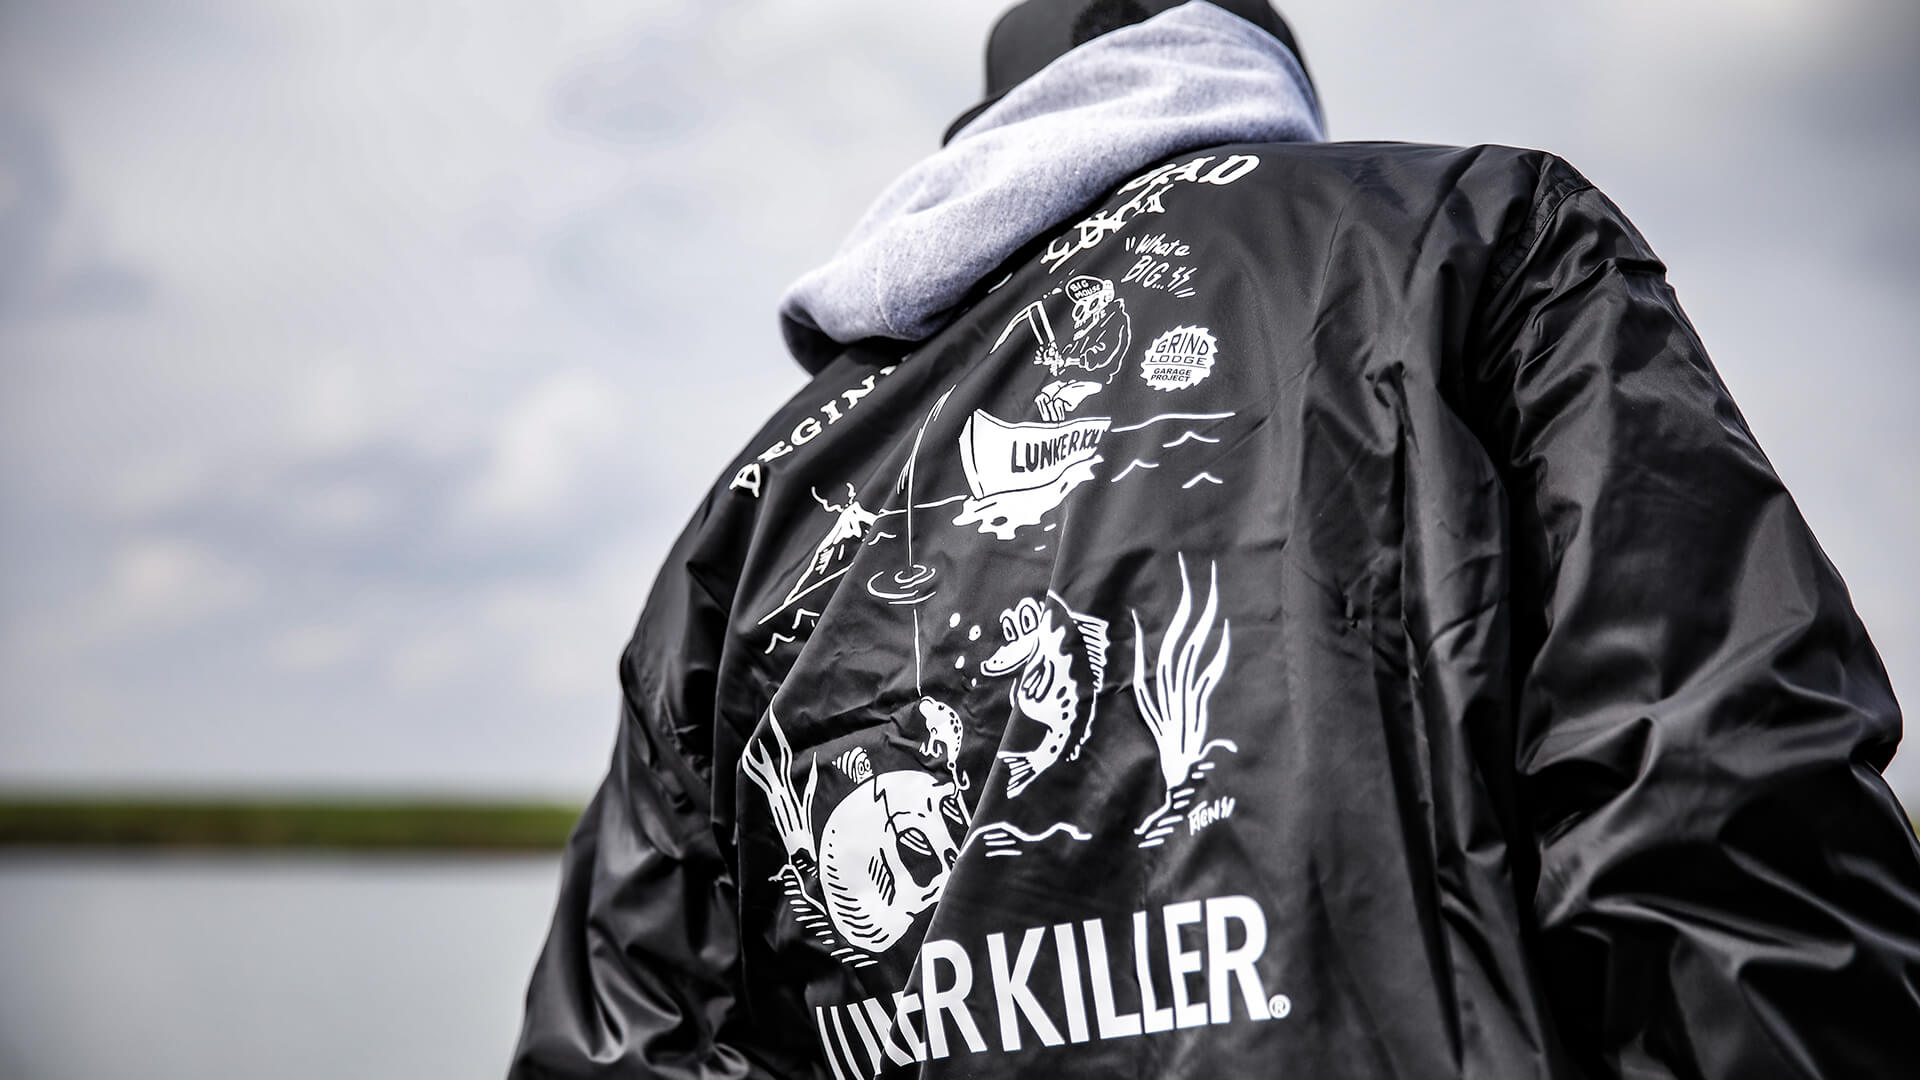 LUNKER KILLER | Enjoy your fishing Life With LUNKER KILLER.